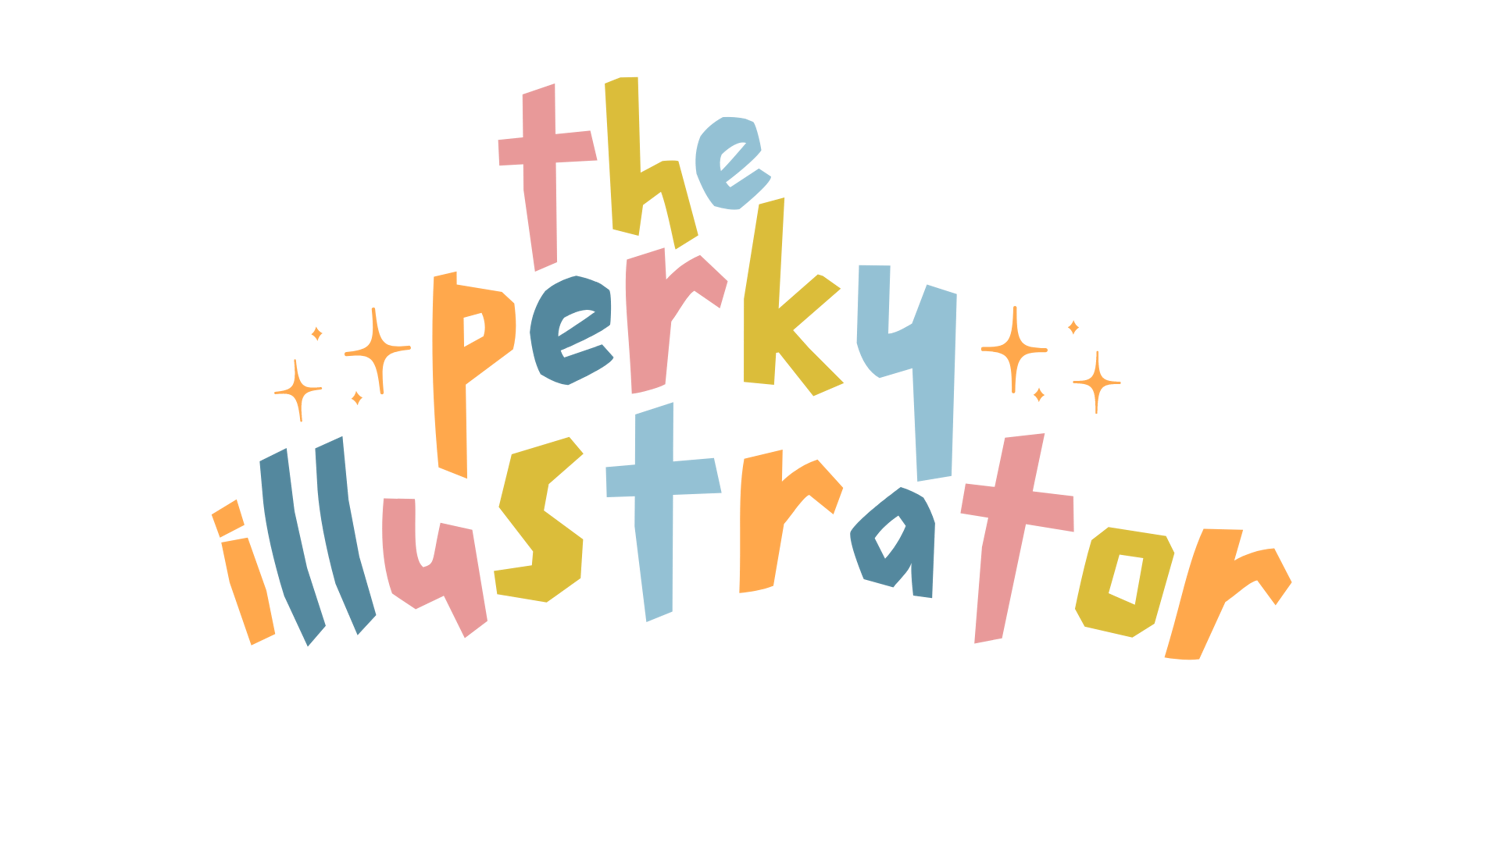 The perky illustrator logo